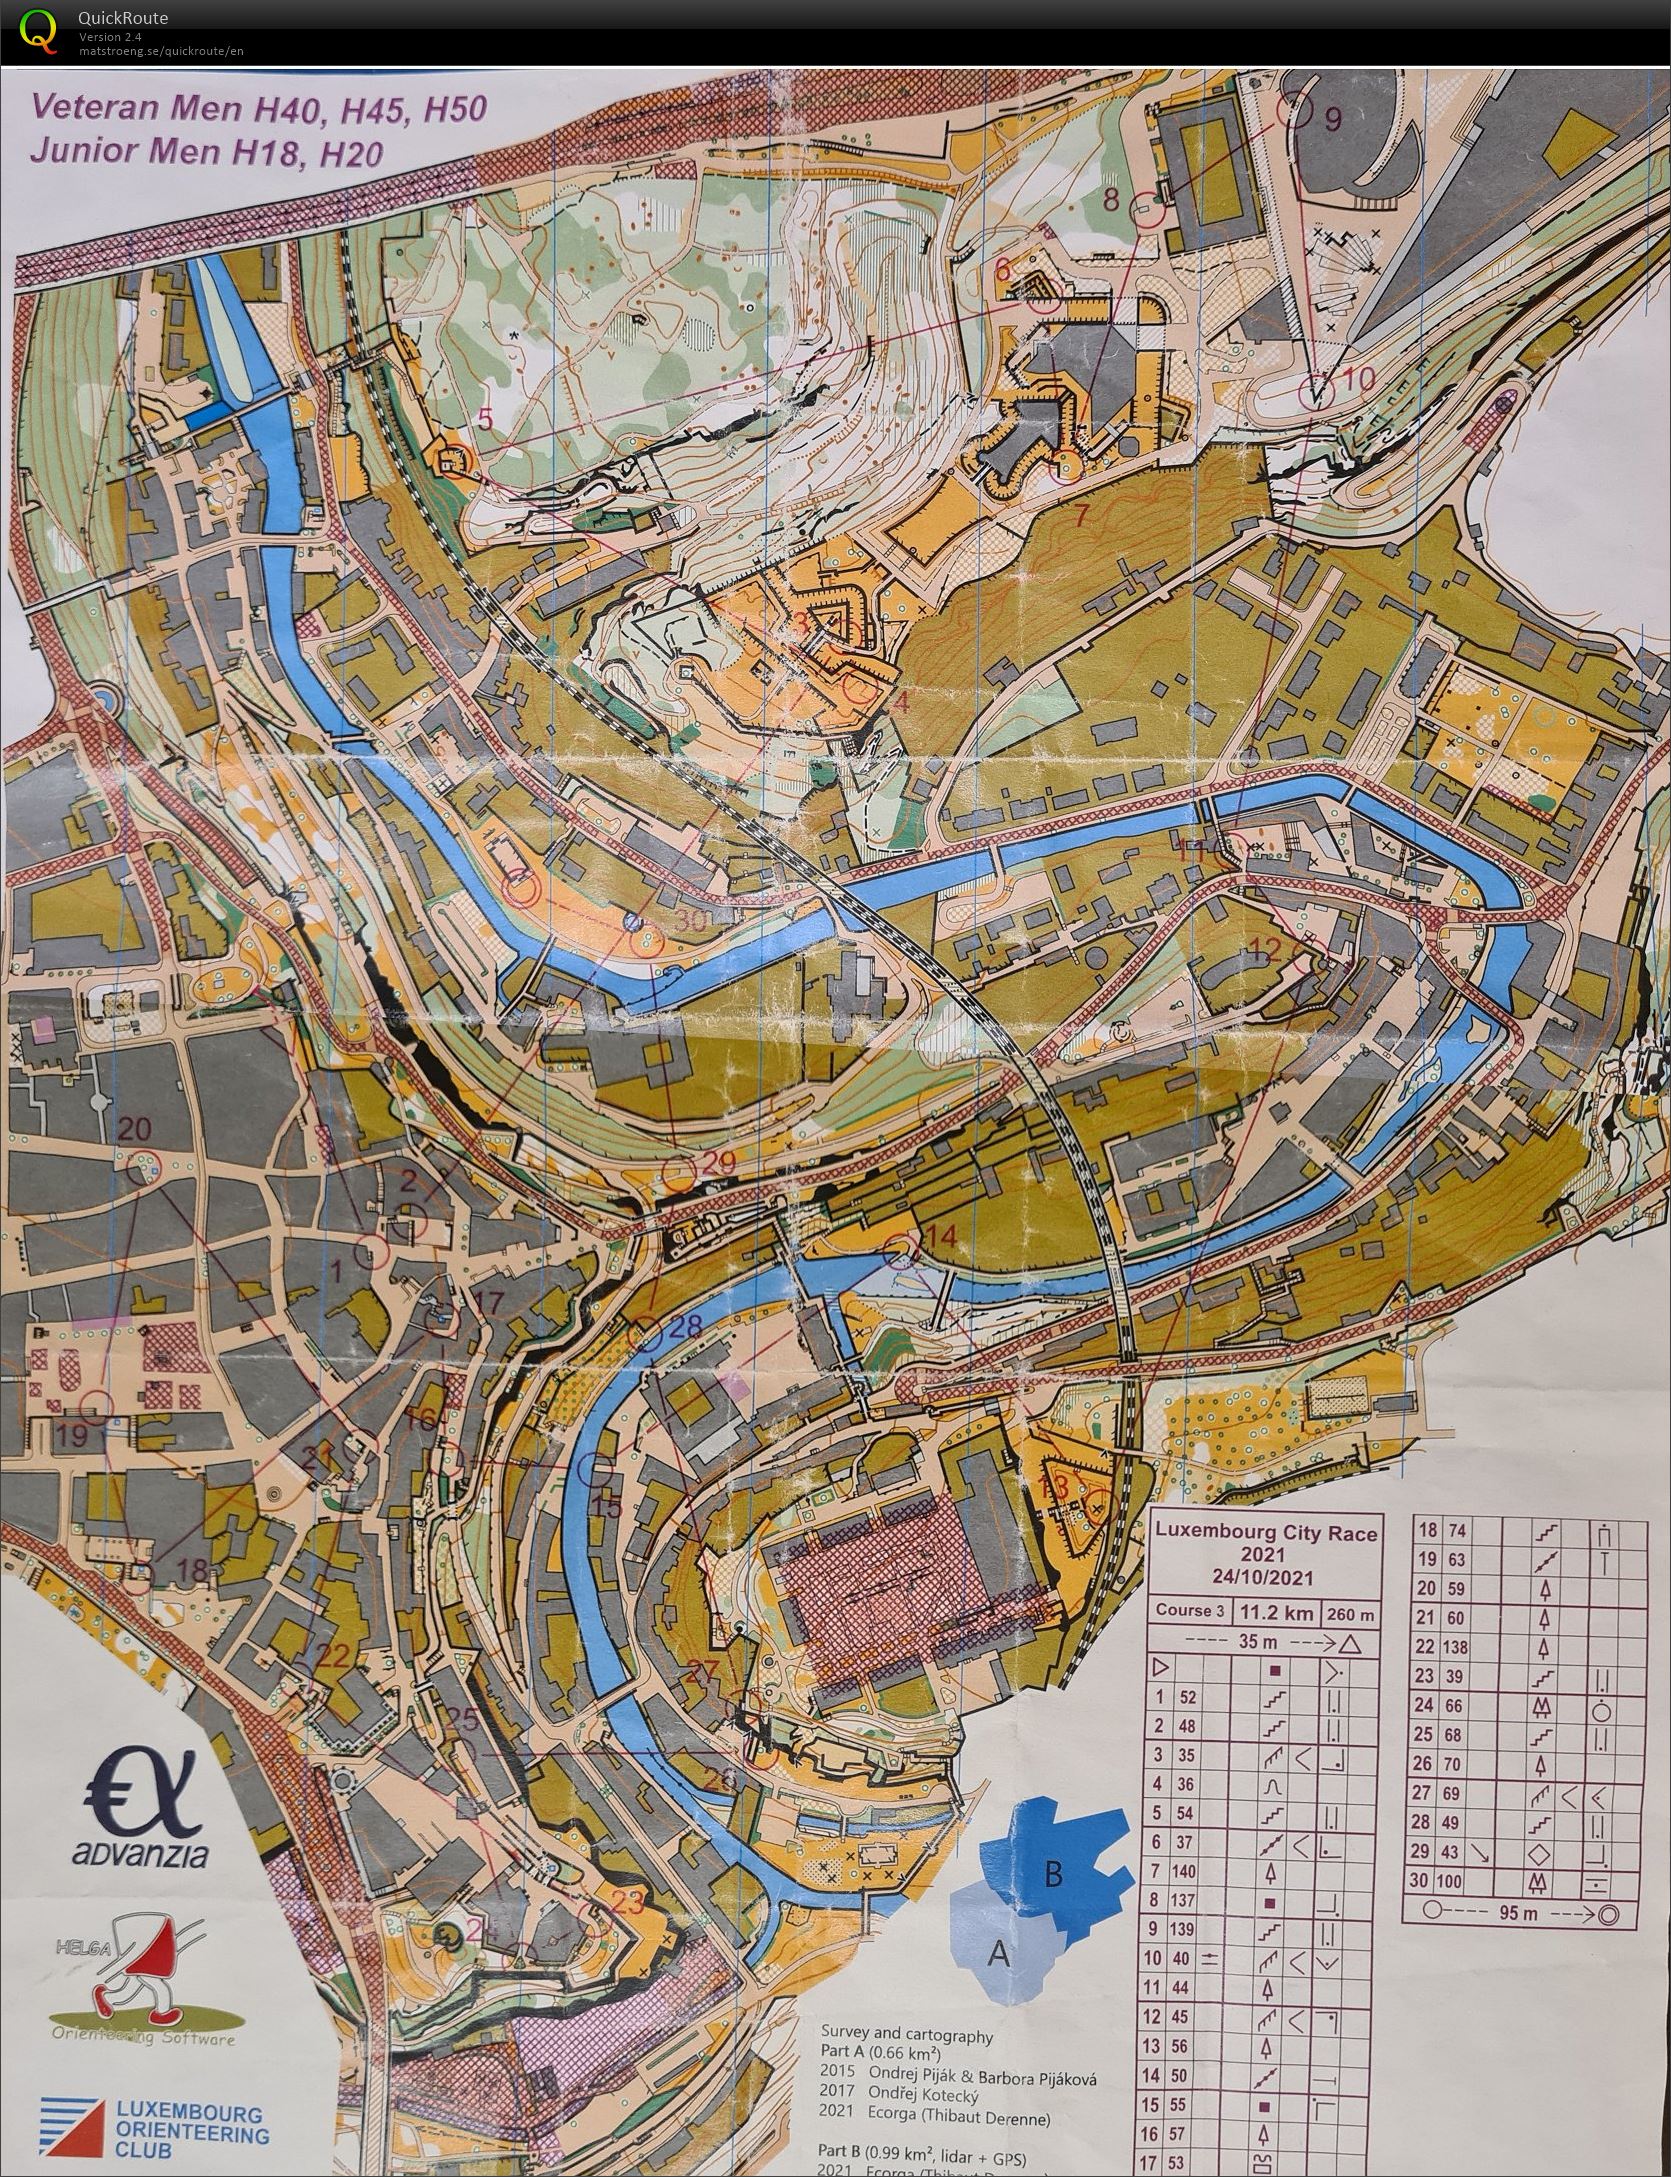 Luxemburg City Race, Long, M50 (24.10.2021)